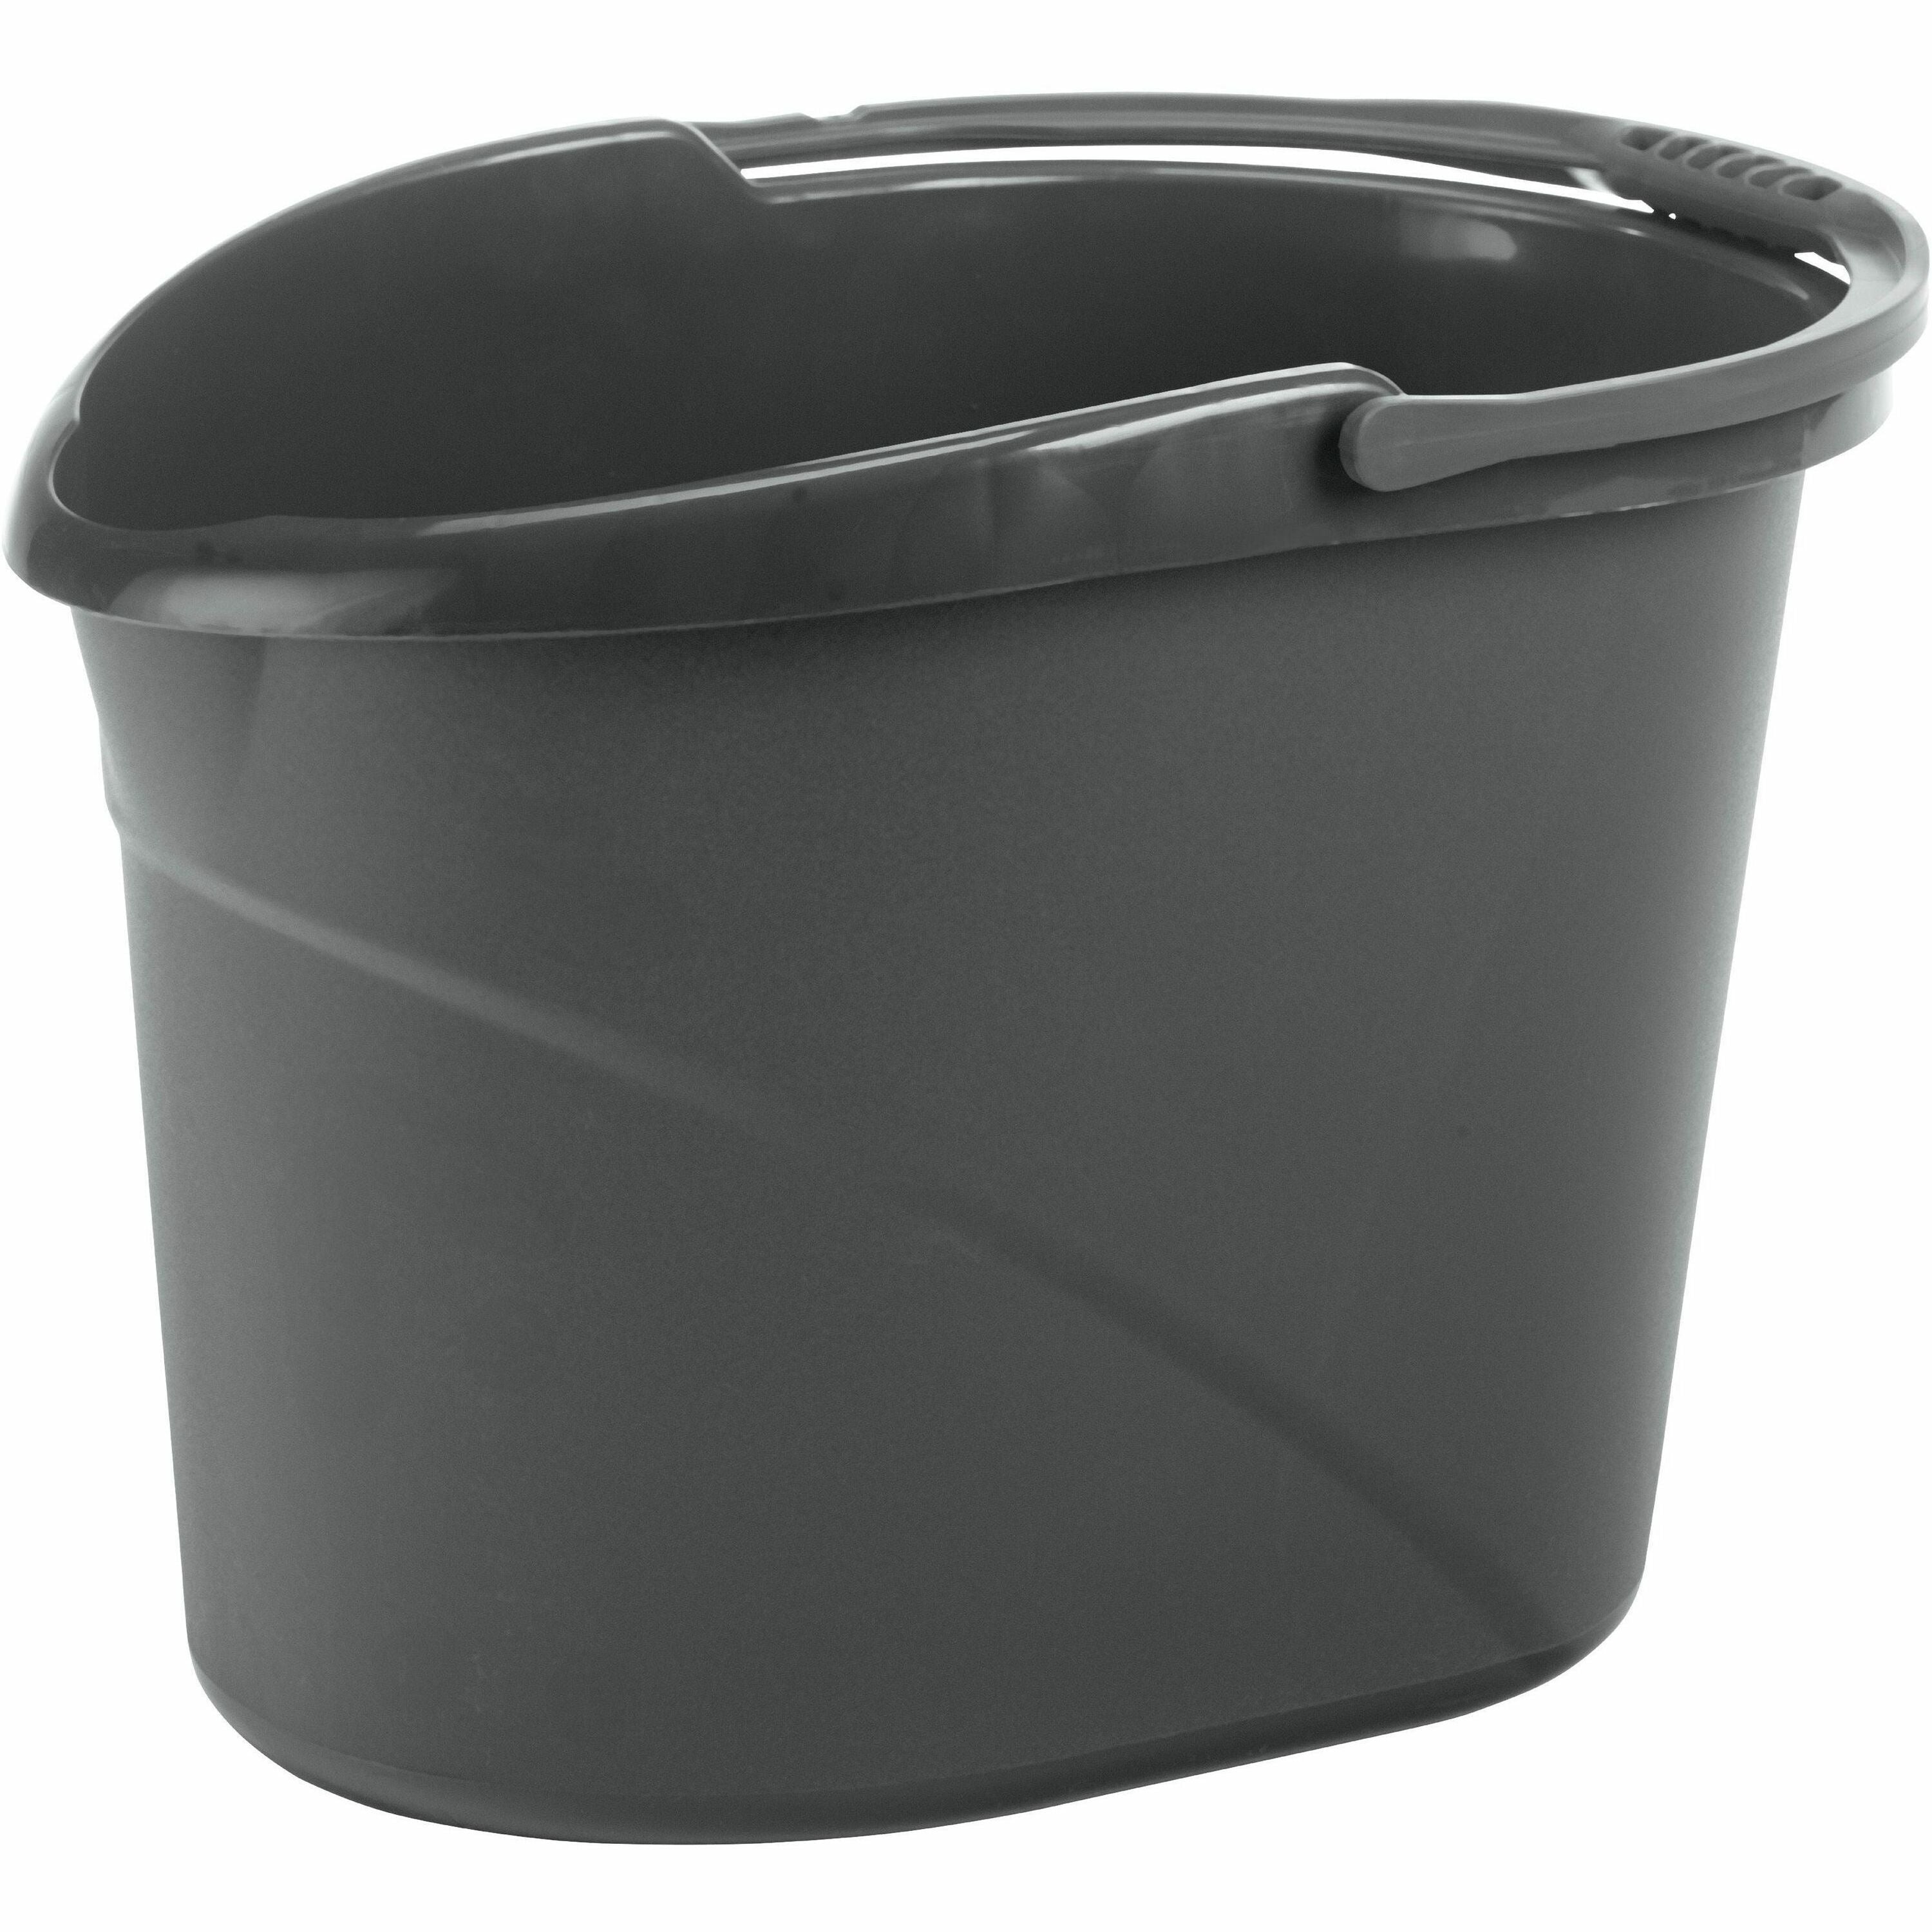 o-cedar-easy-pour-bucket-3-gal-splash-resistant-durable-handle-plastic-gray-1-each_fhp152592 - 1